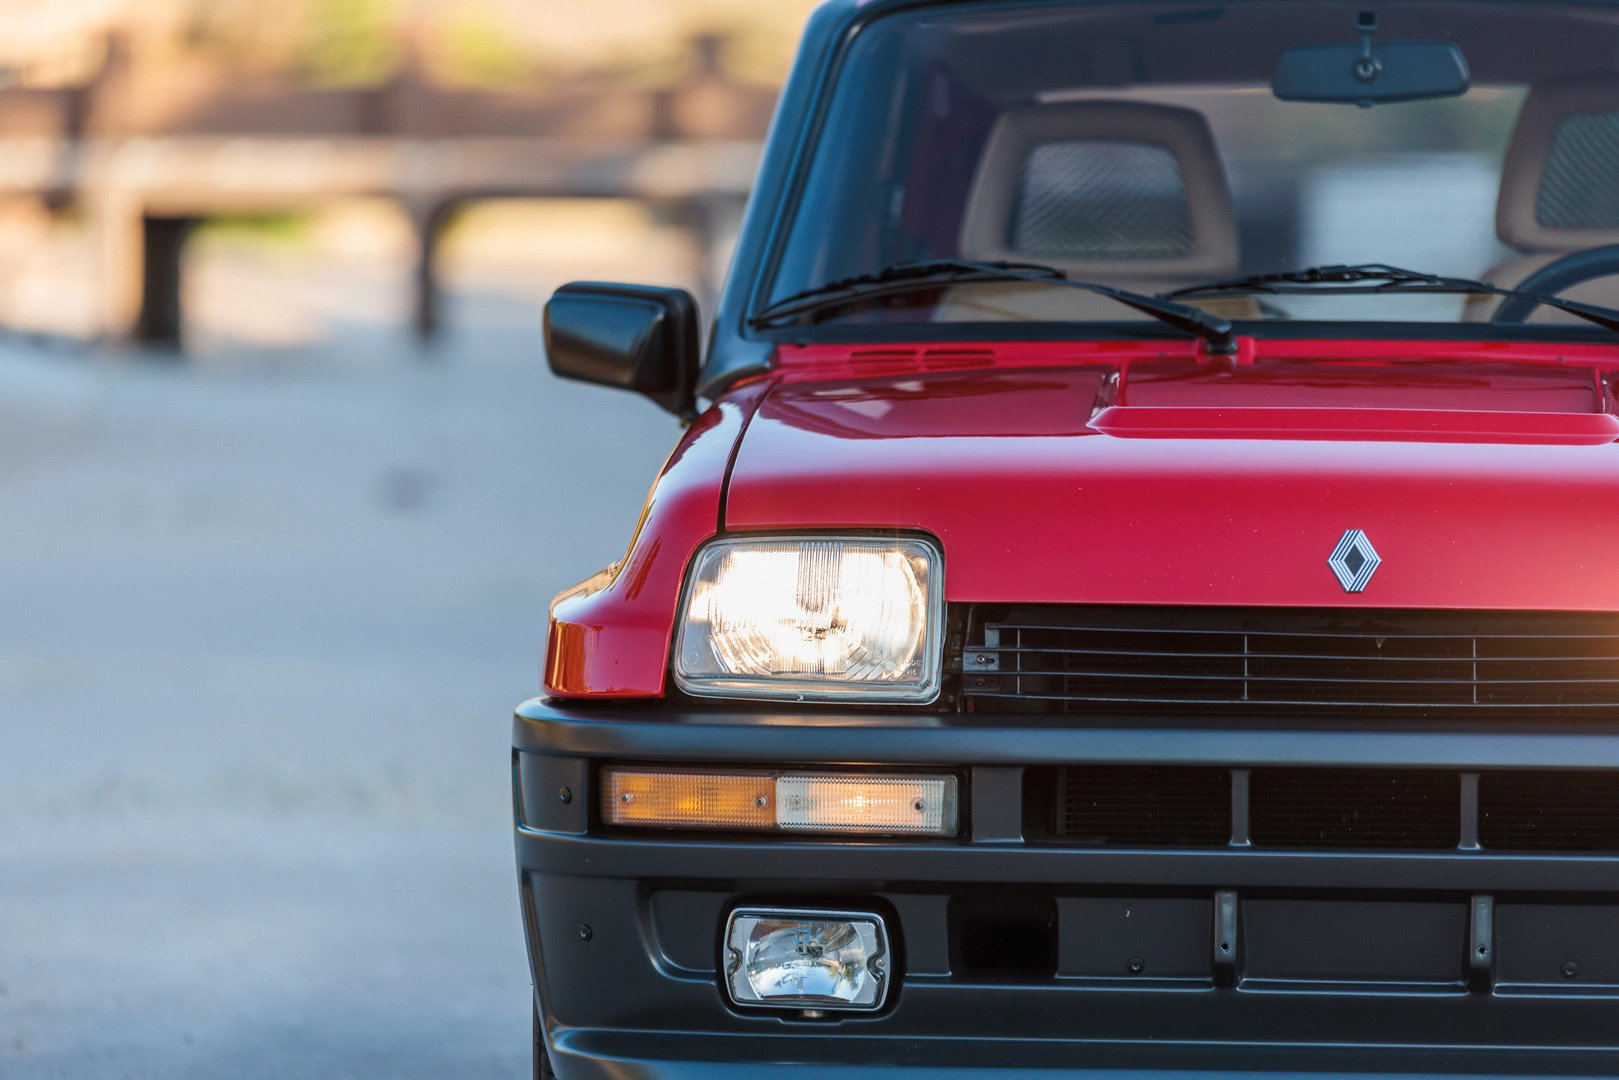 The cult Renault 5 Turbo is immortal, still worth tens of millions 3